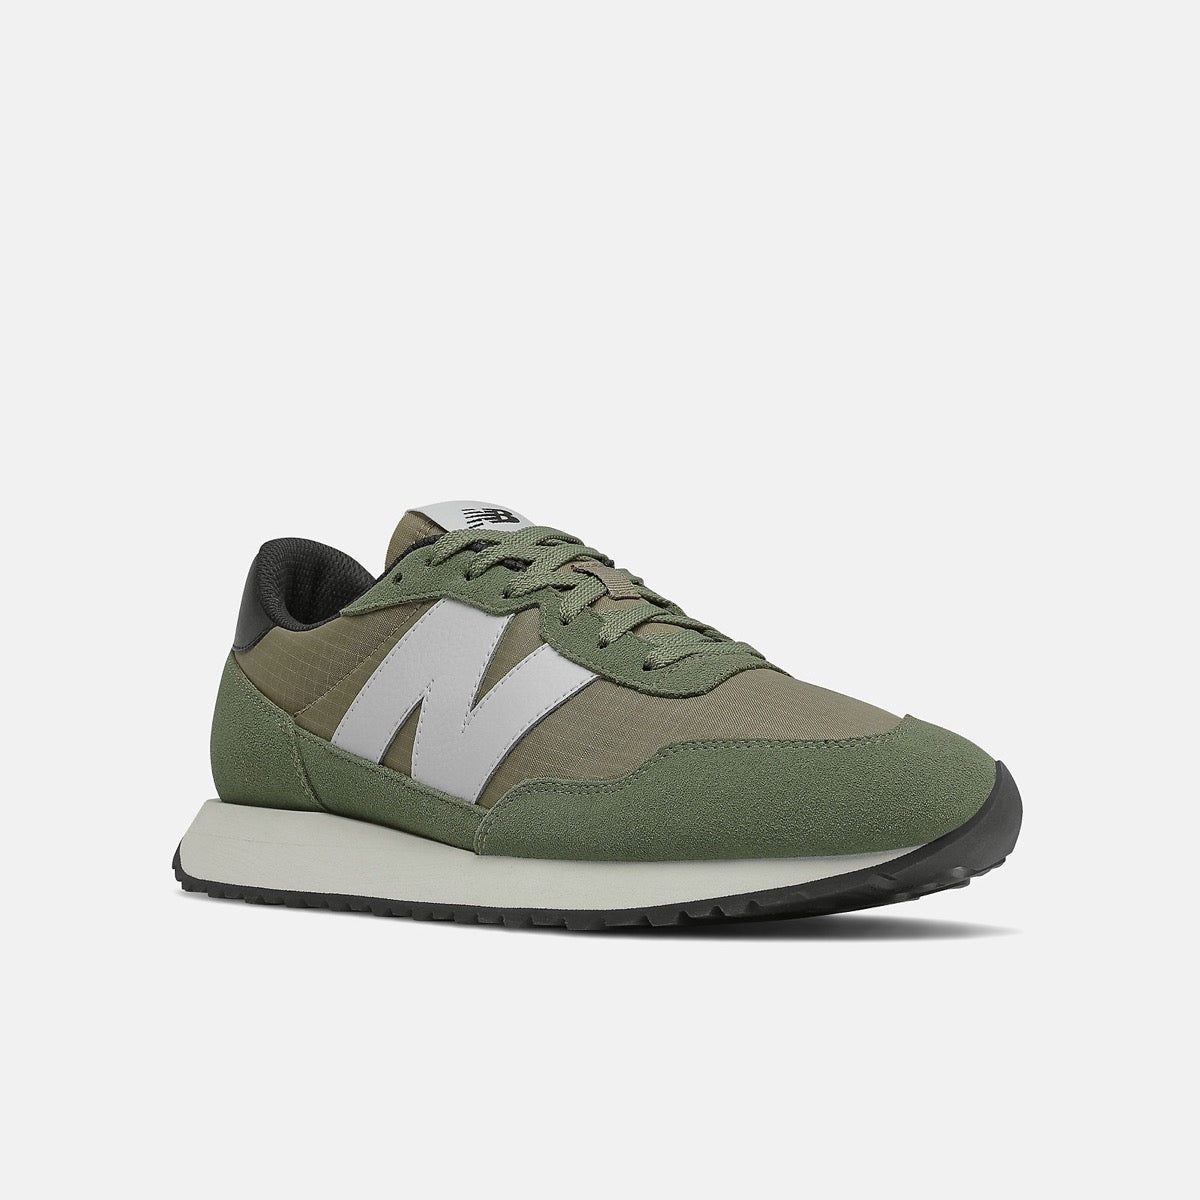 Scarpe Uomo NEW BALANCE Sneakers 237 in Suede e Ripstop colore Norway Spruce e Covert Green